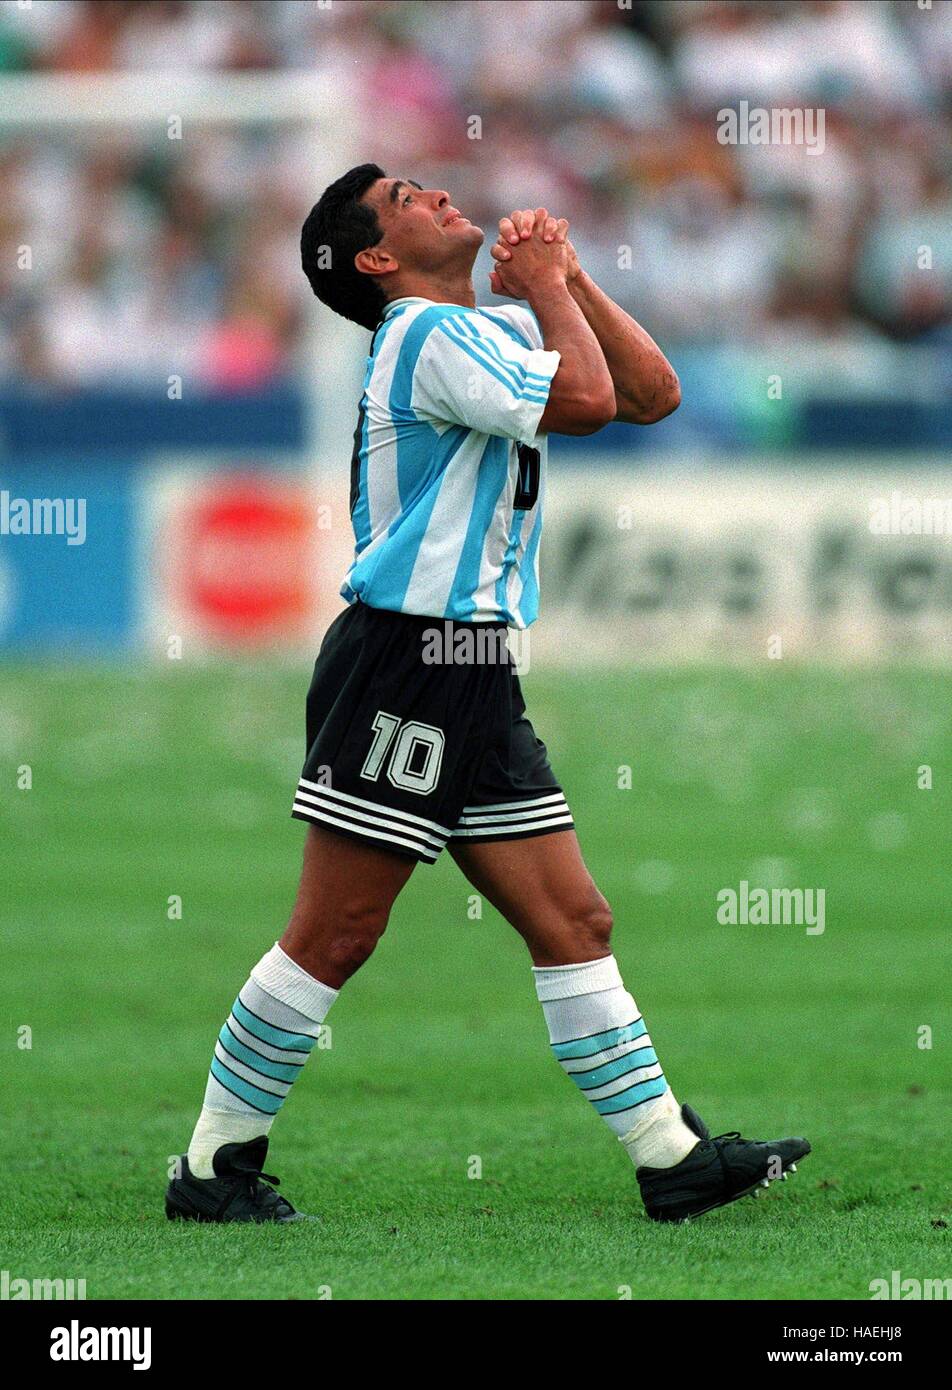 diego-maradona-argentina-02-july-1994-HAEHJ8.jpg